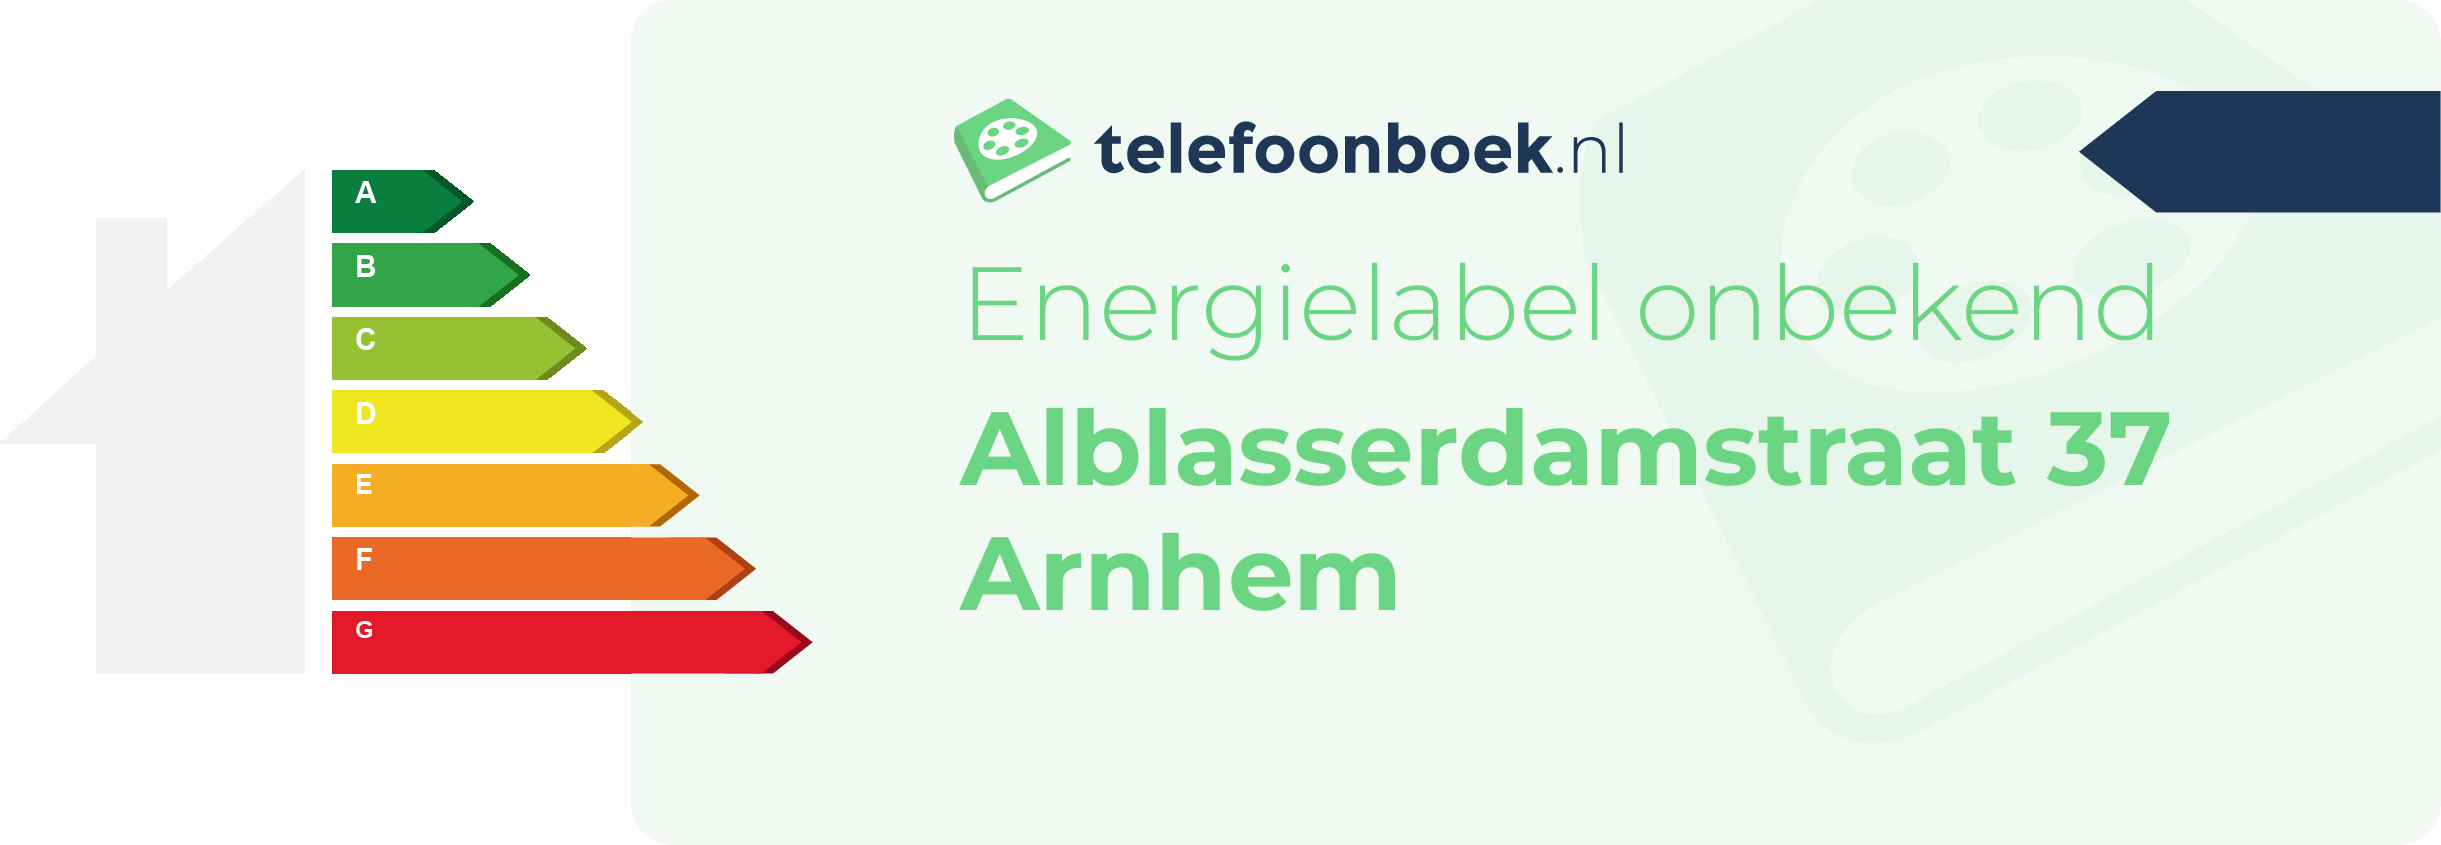 Energielabel Alblasserdamstraat 37 Arnhem